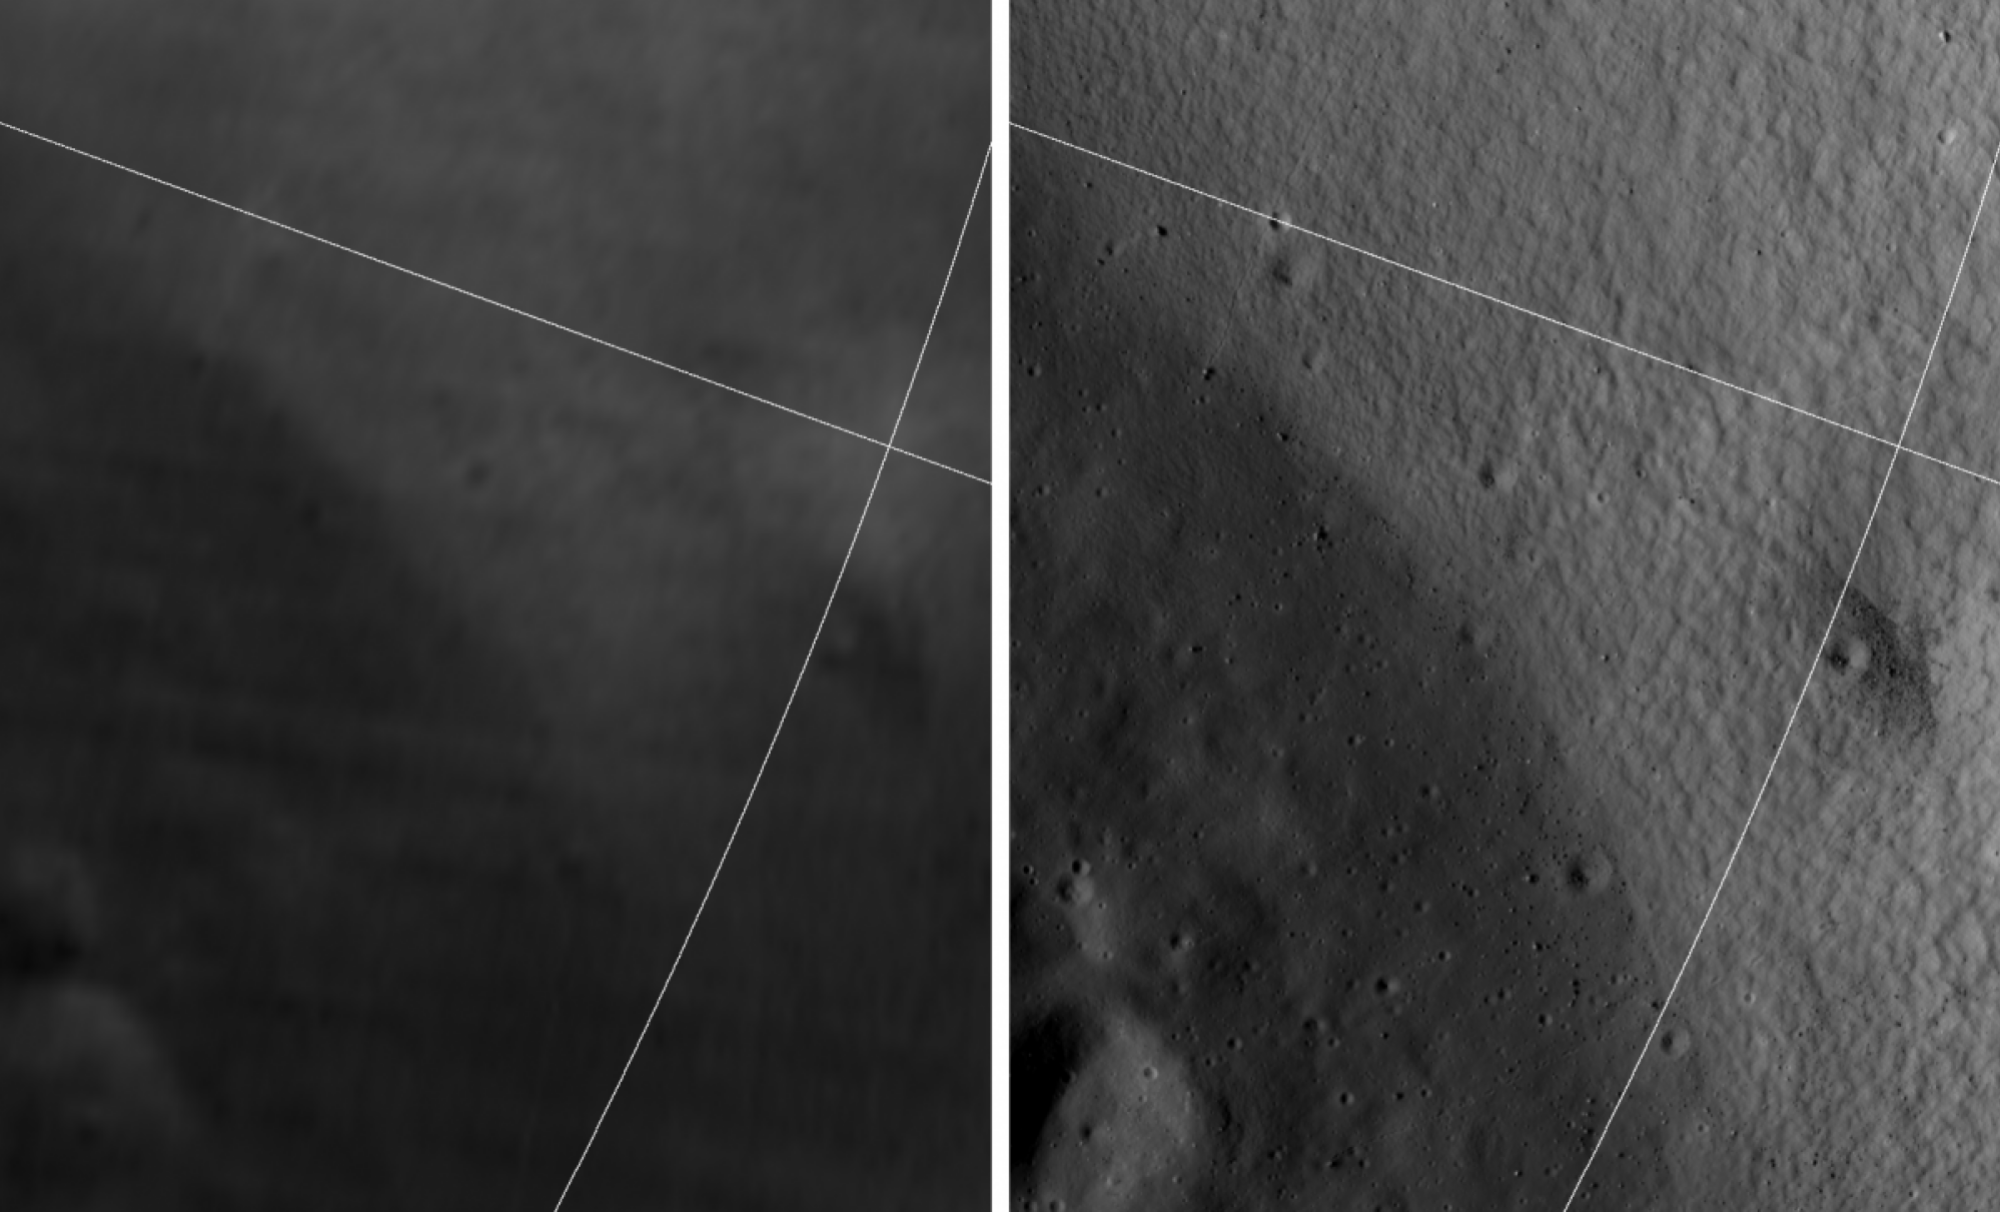 NASA comparing Shackleton Crater images